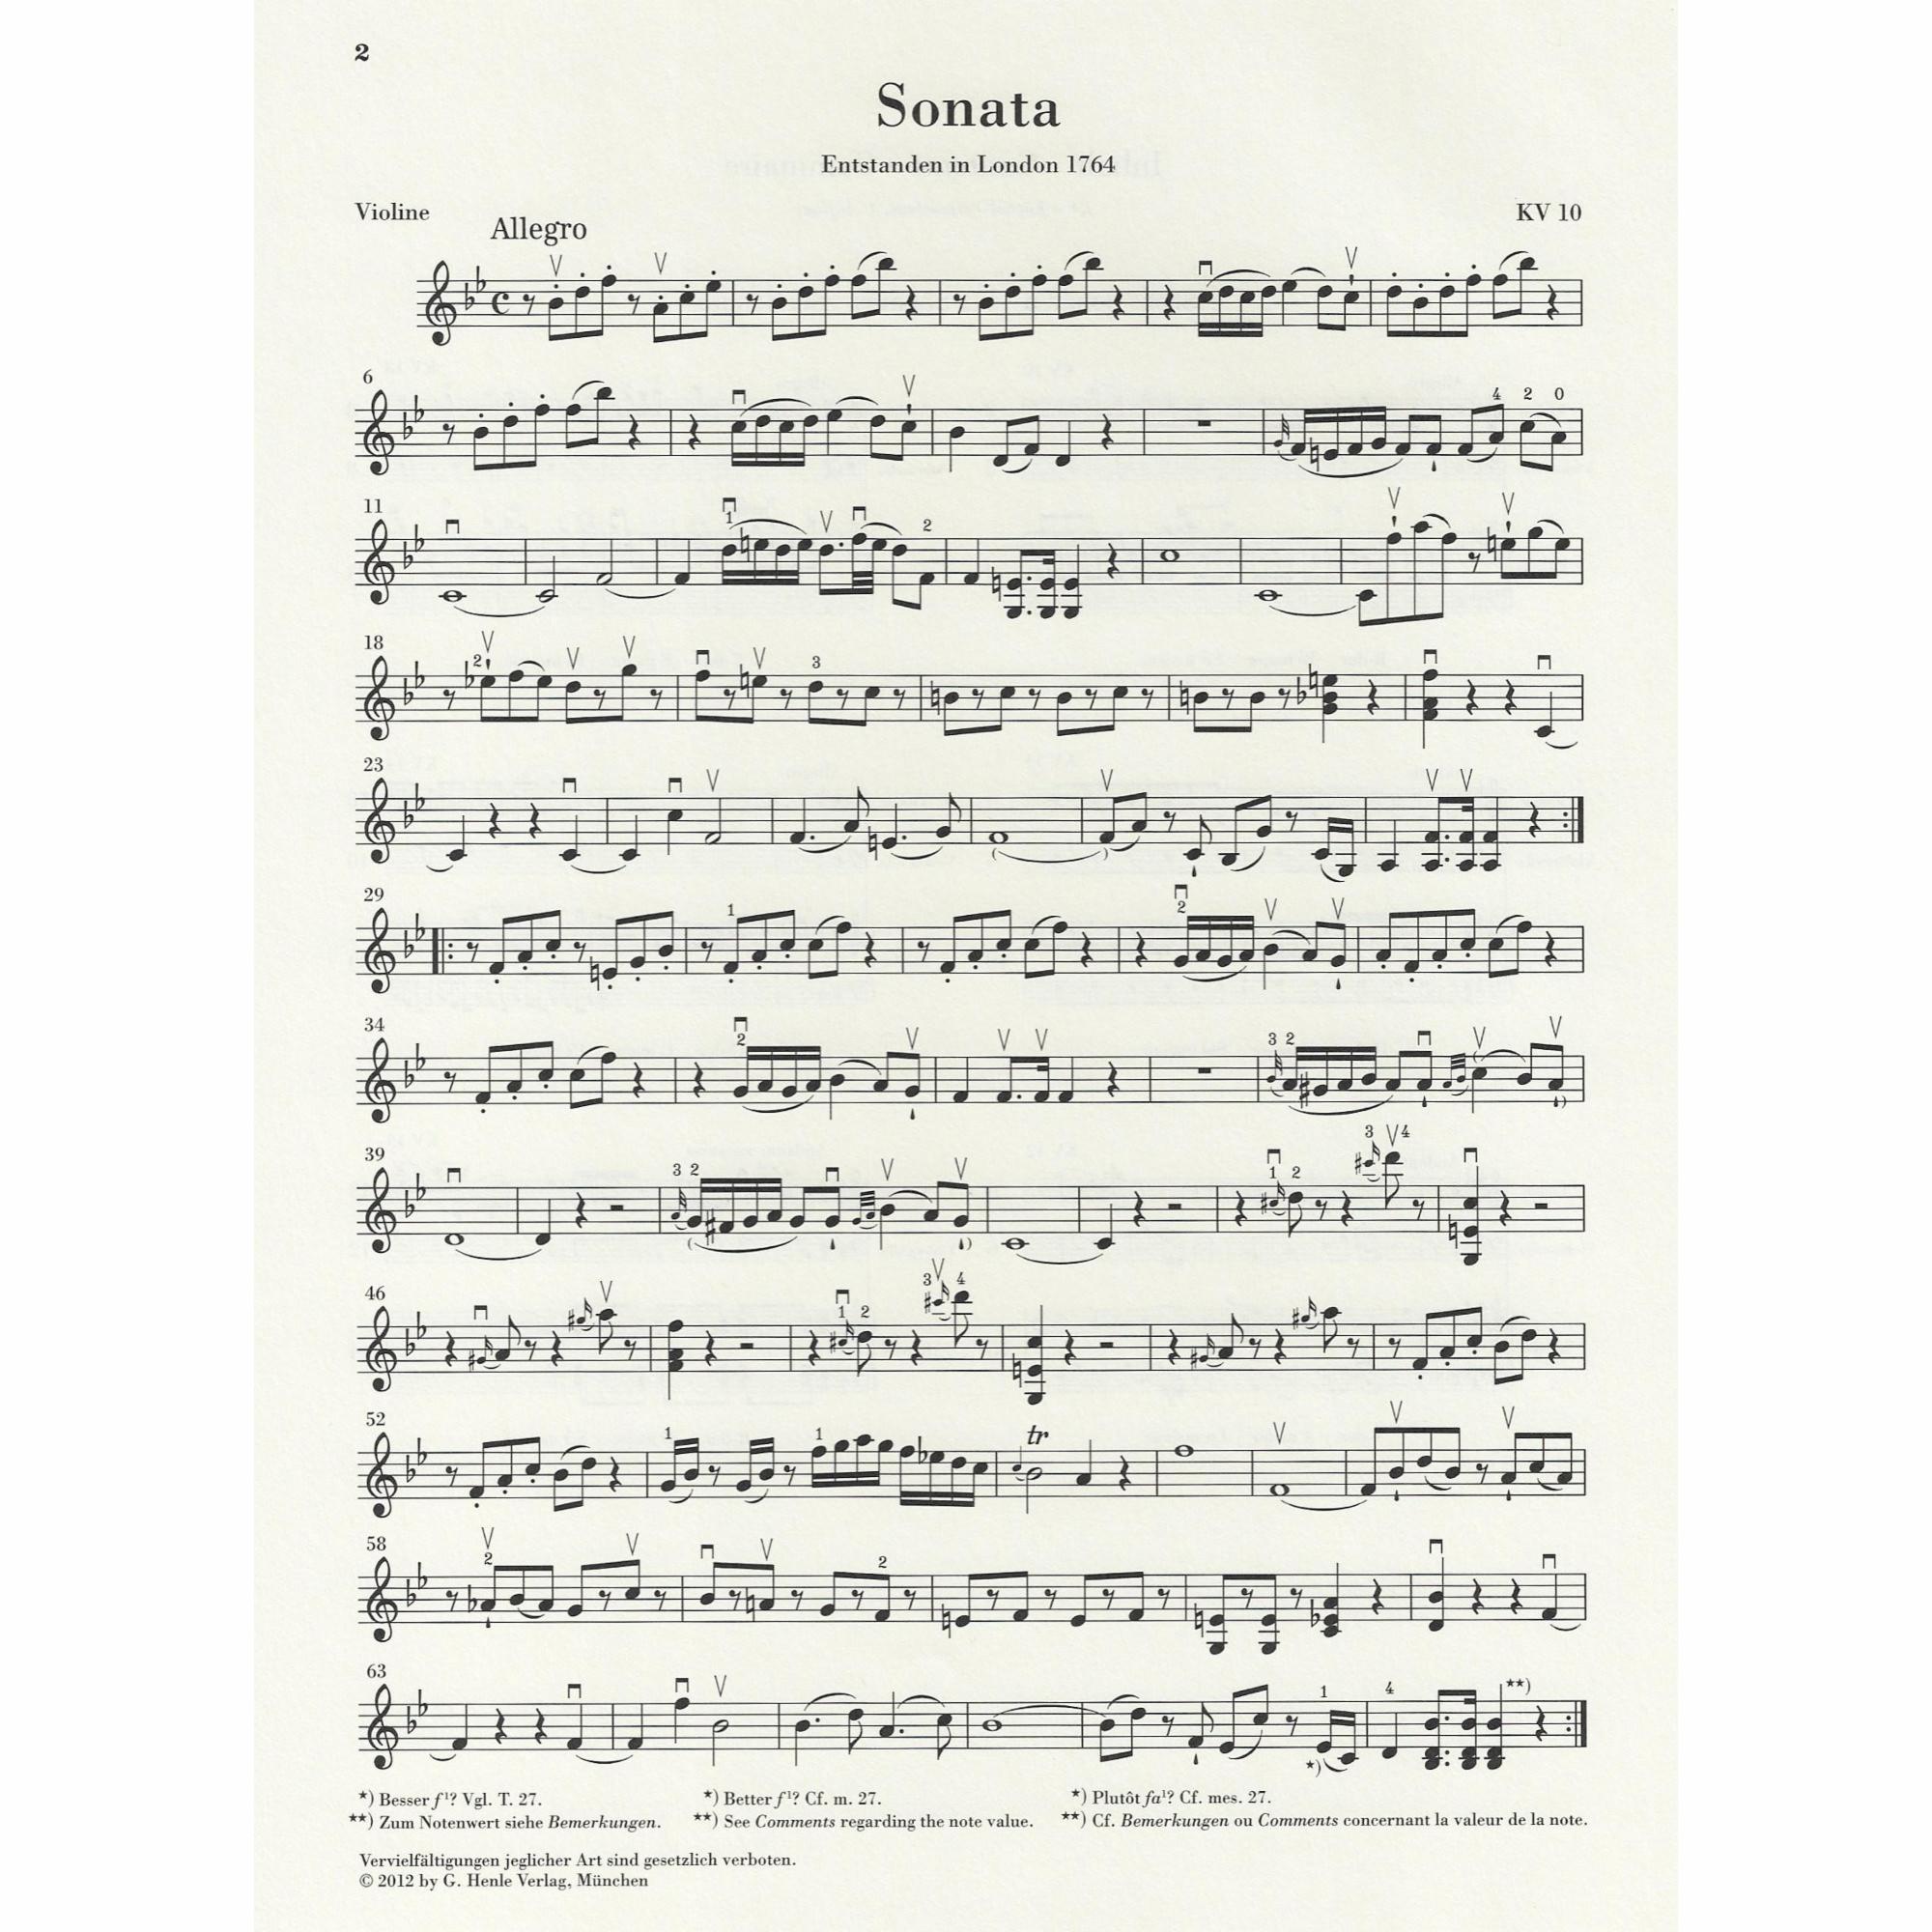 Sample: Vol. II, Marked Violin Part